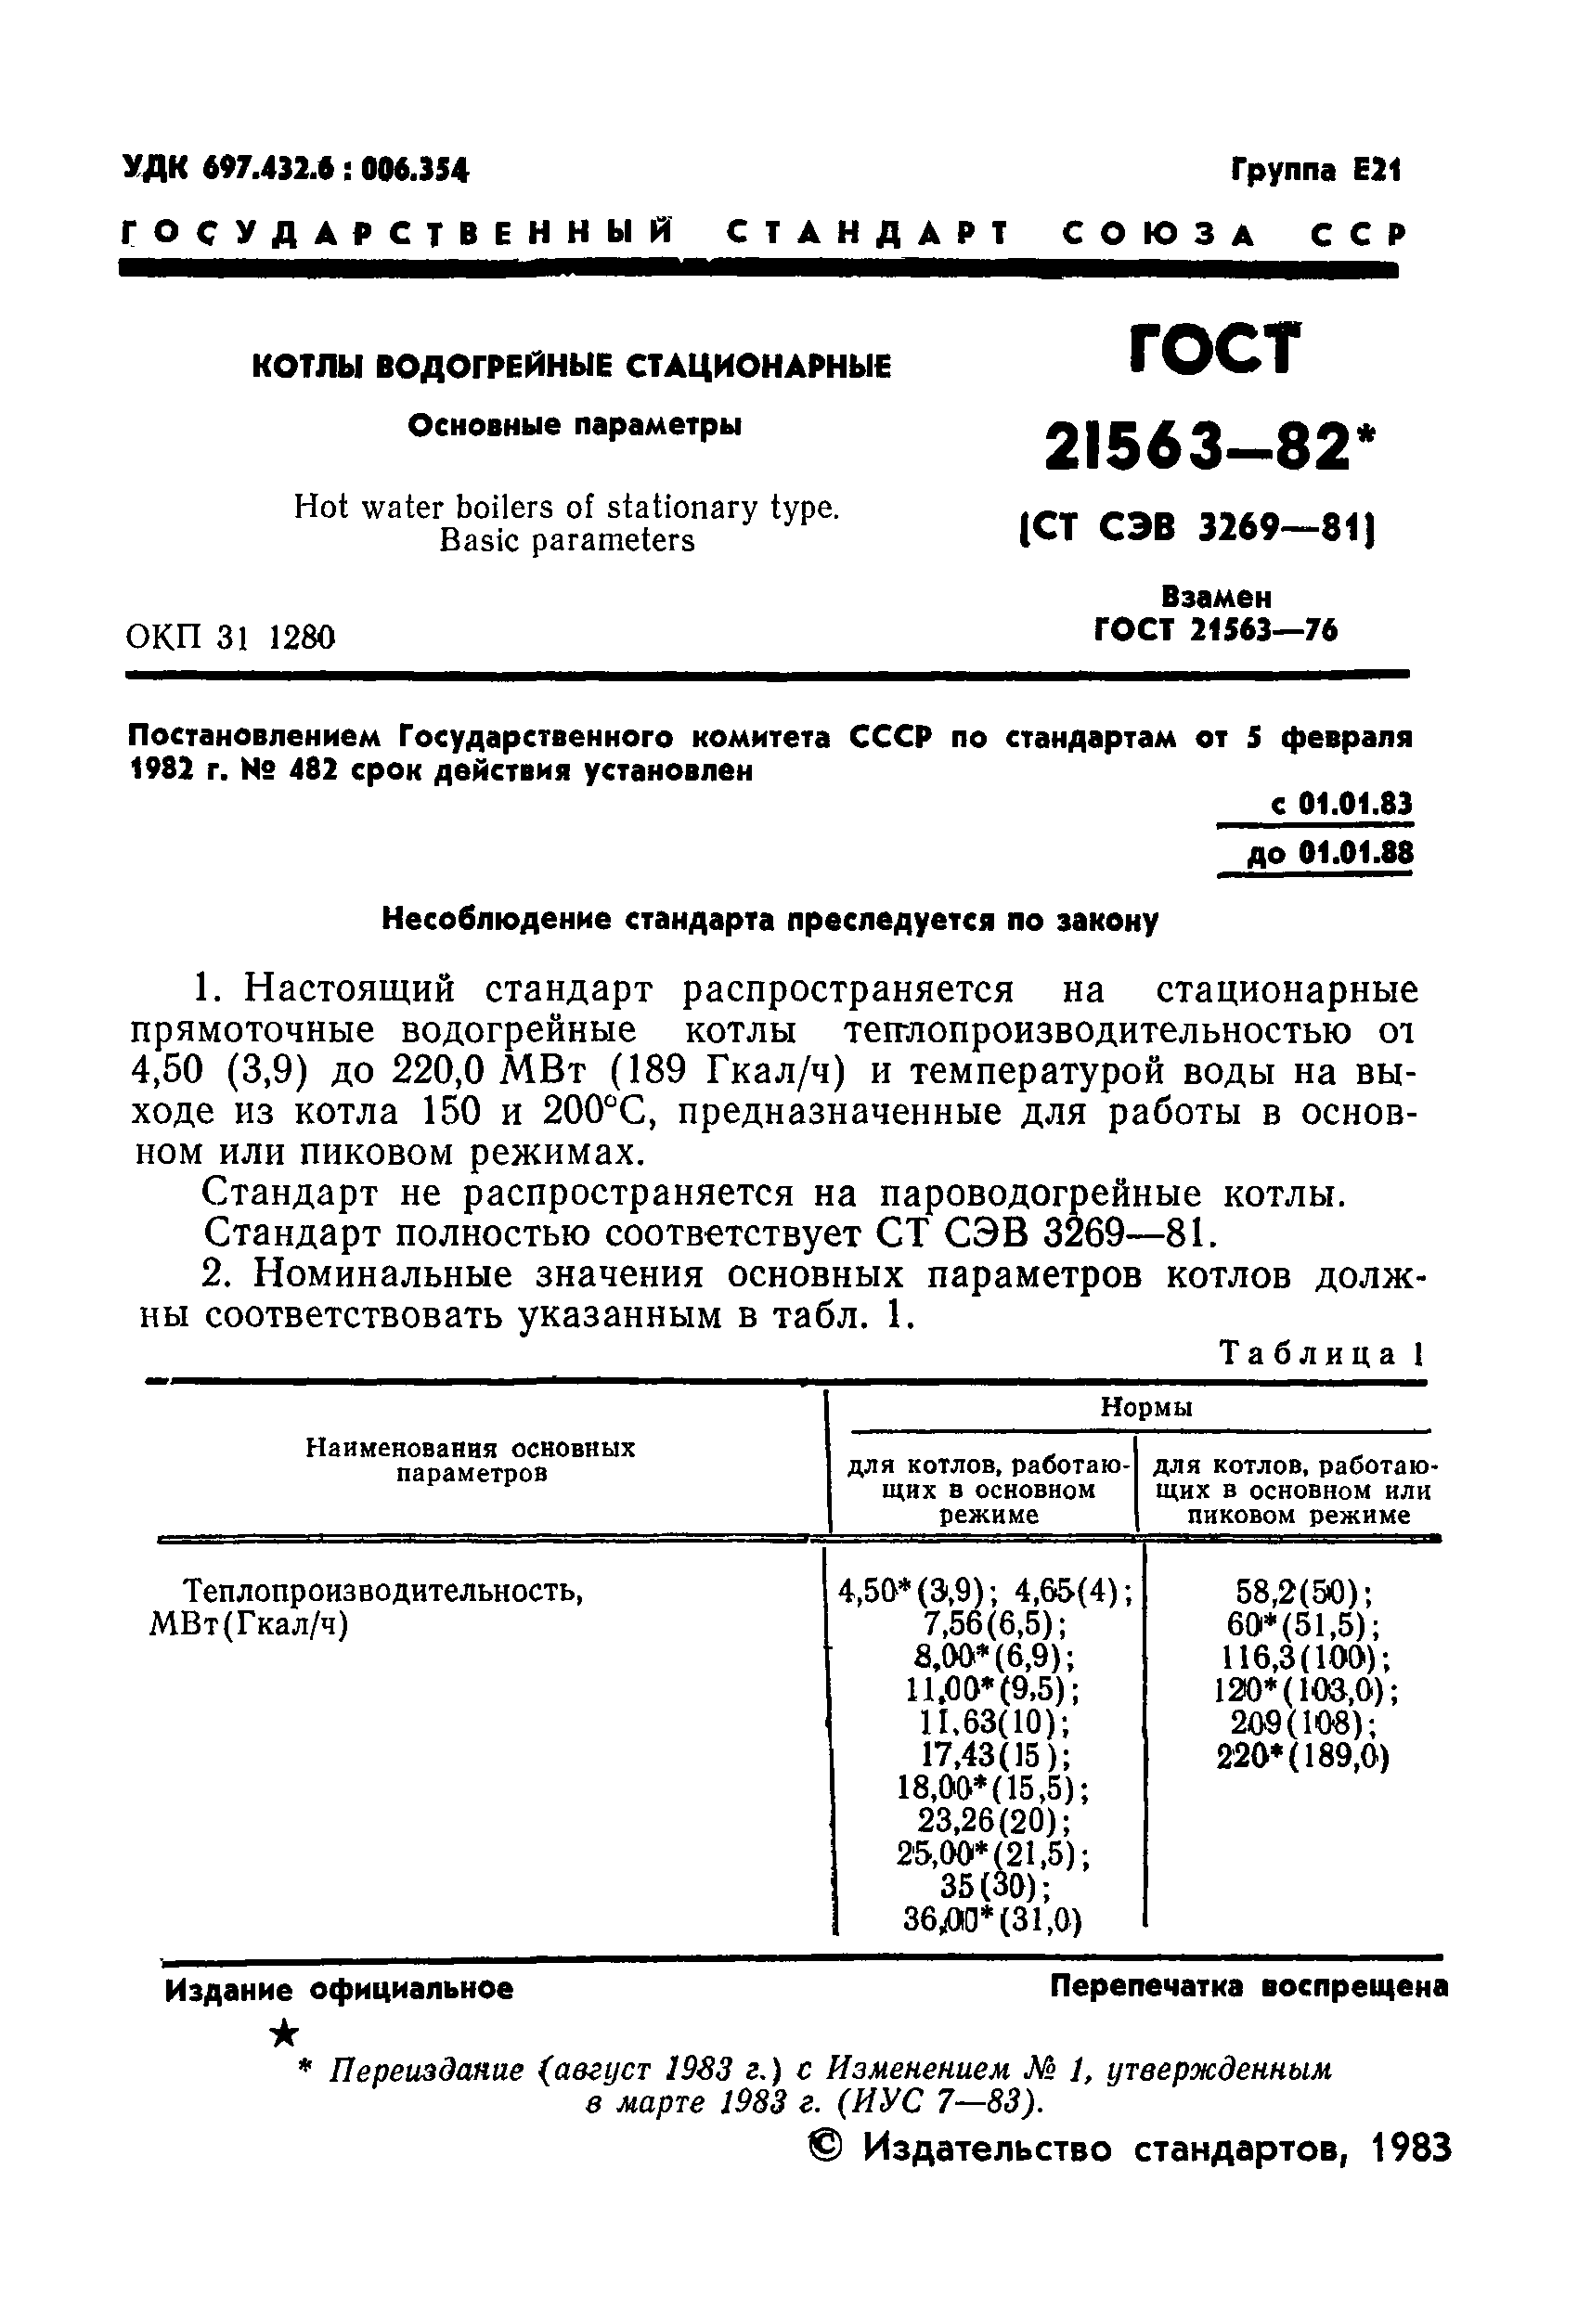 ГОСТ 21563-82